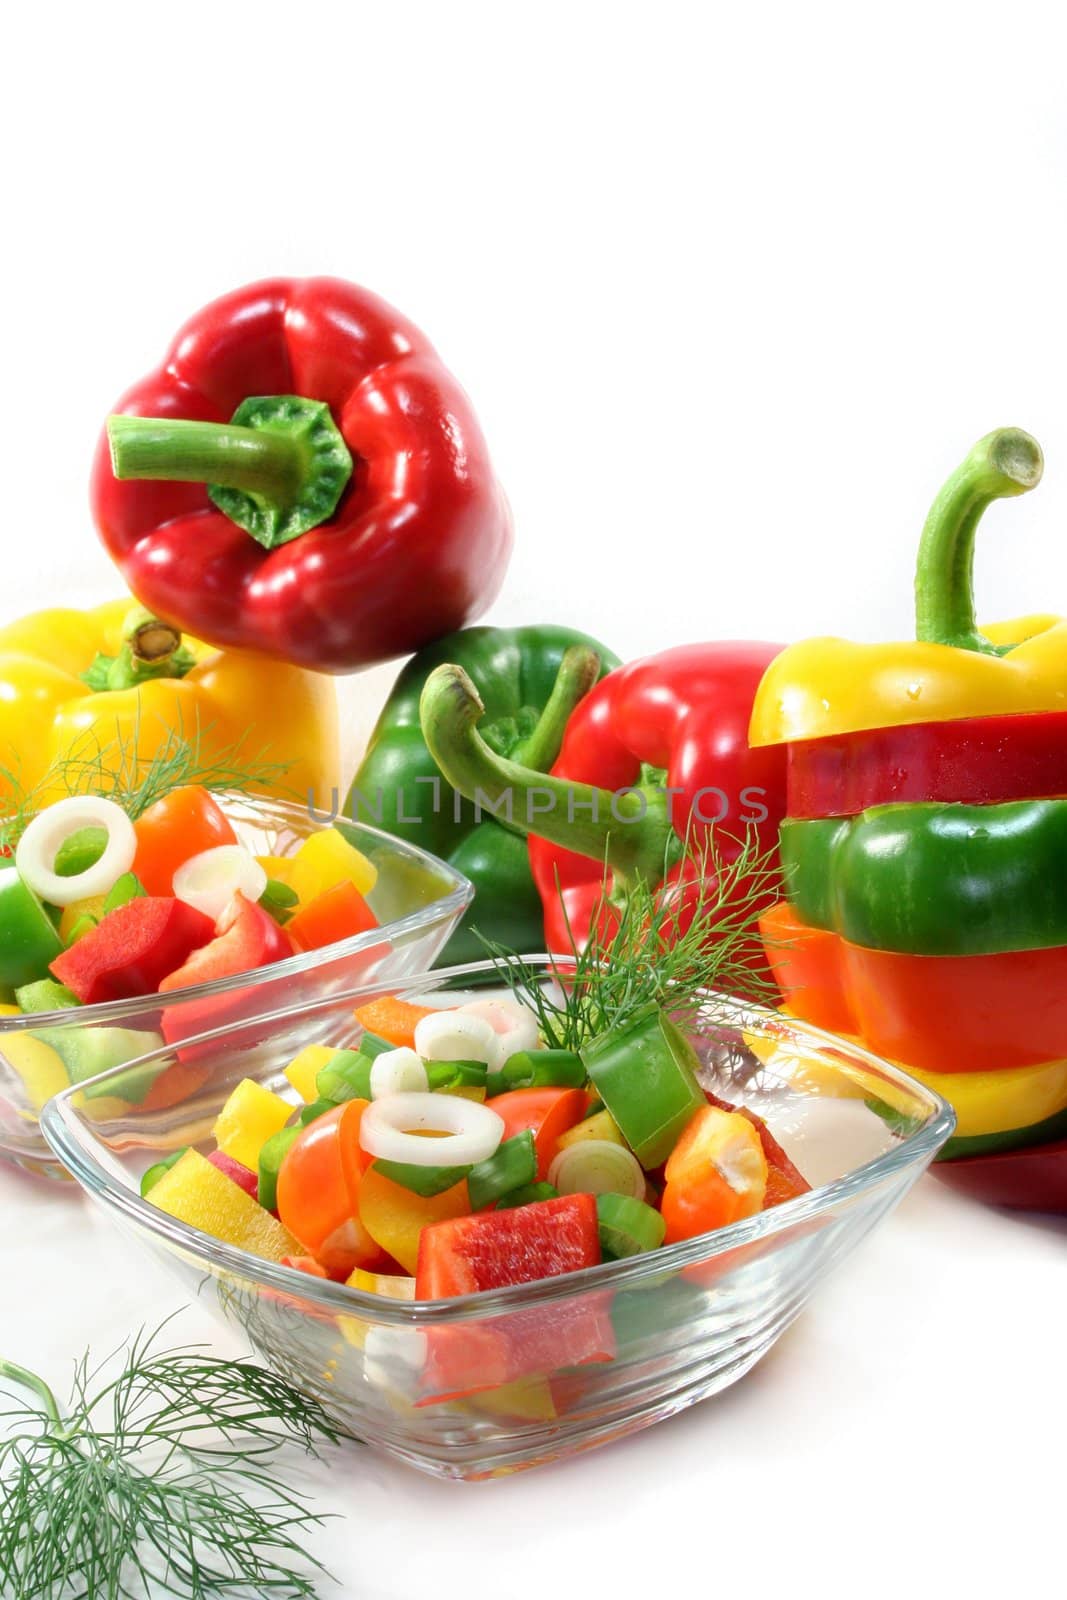 Bell pepper salad by silencefoto